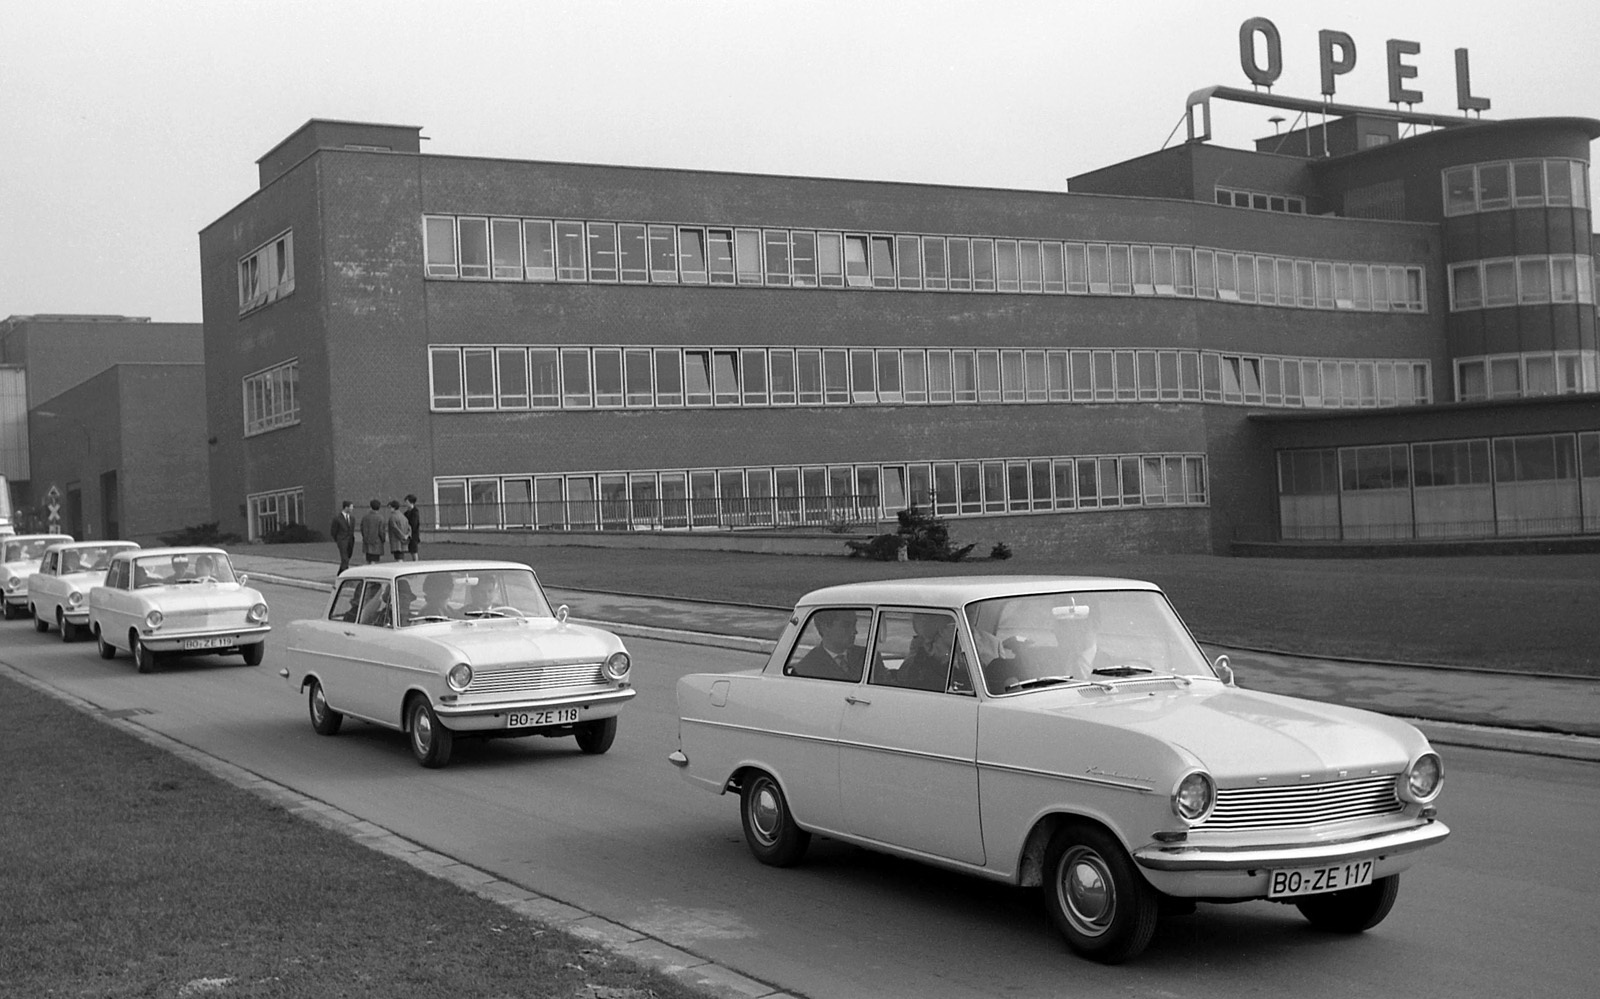 Opel Kadett A 1962-1965, press presentation in Bochum